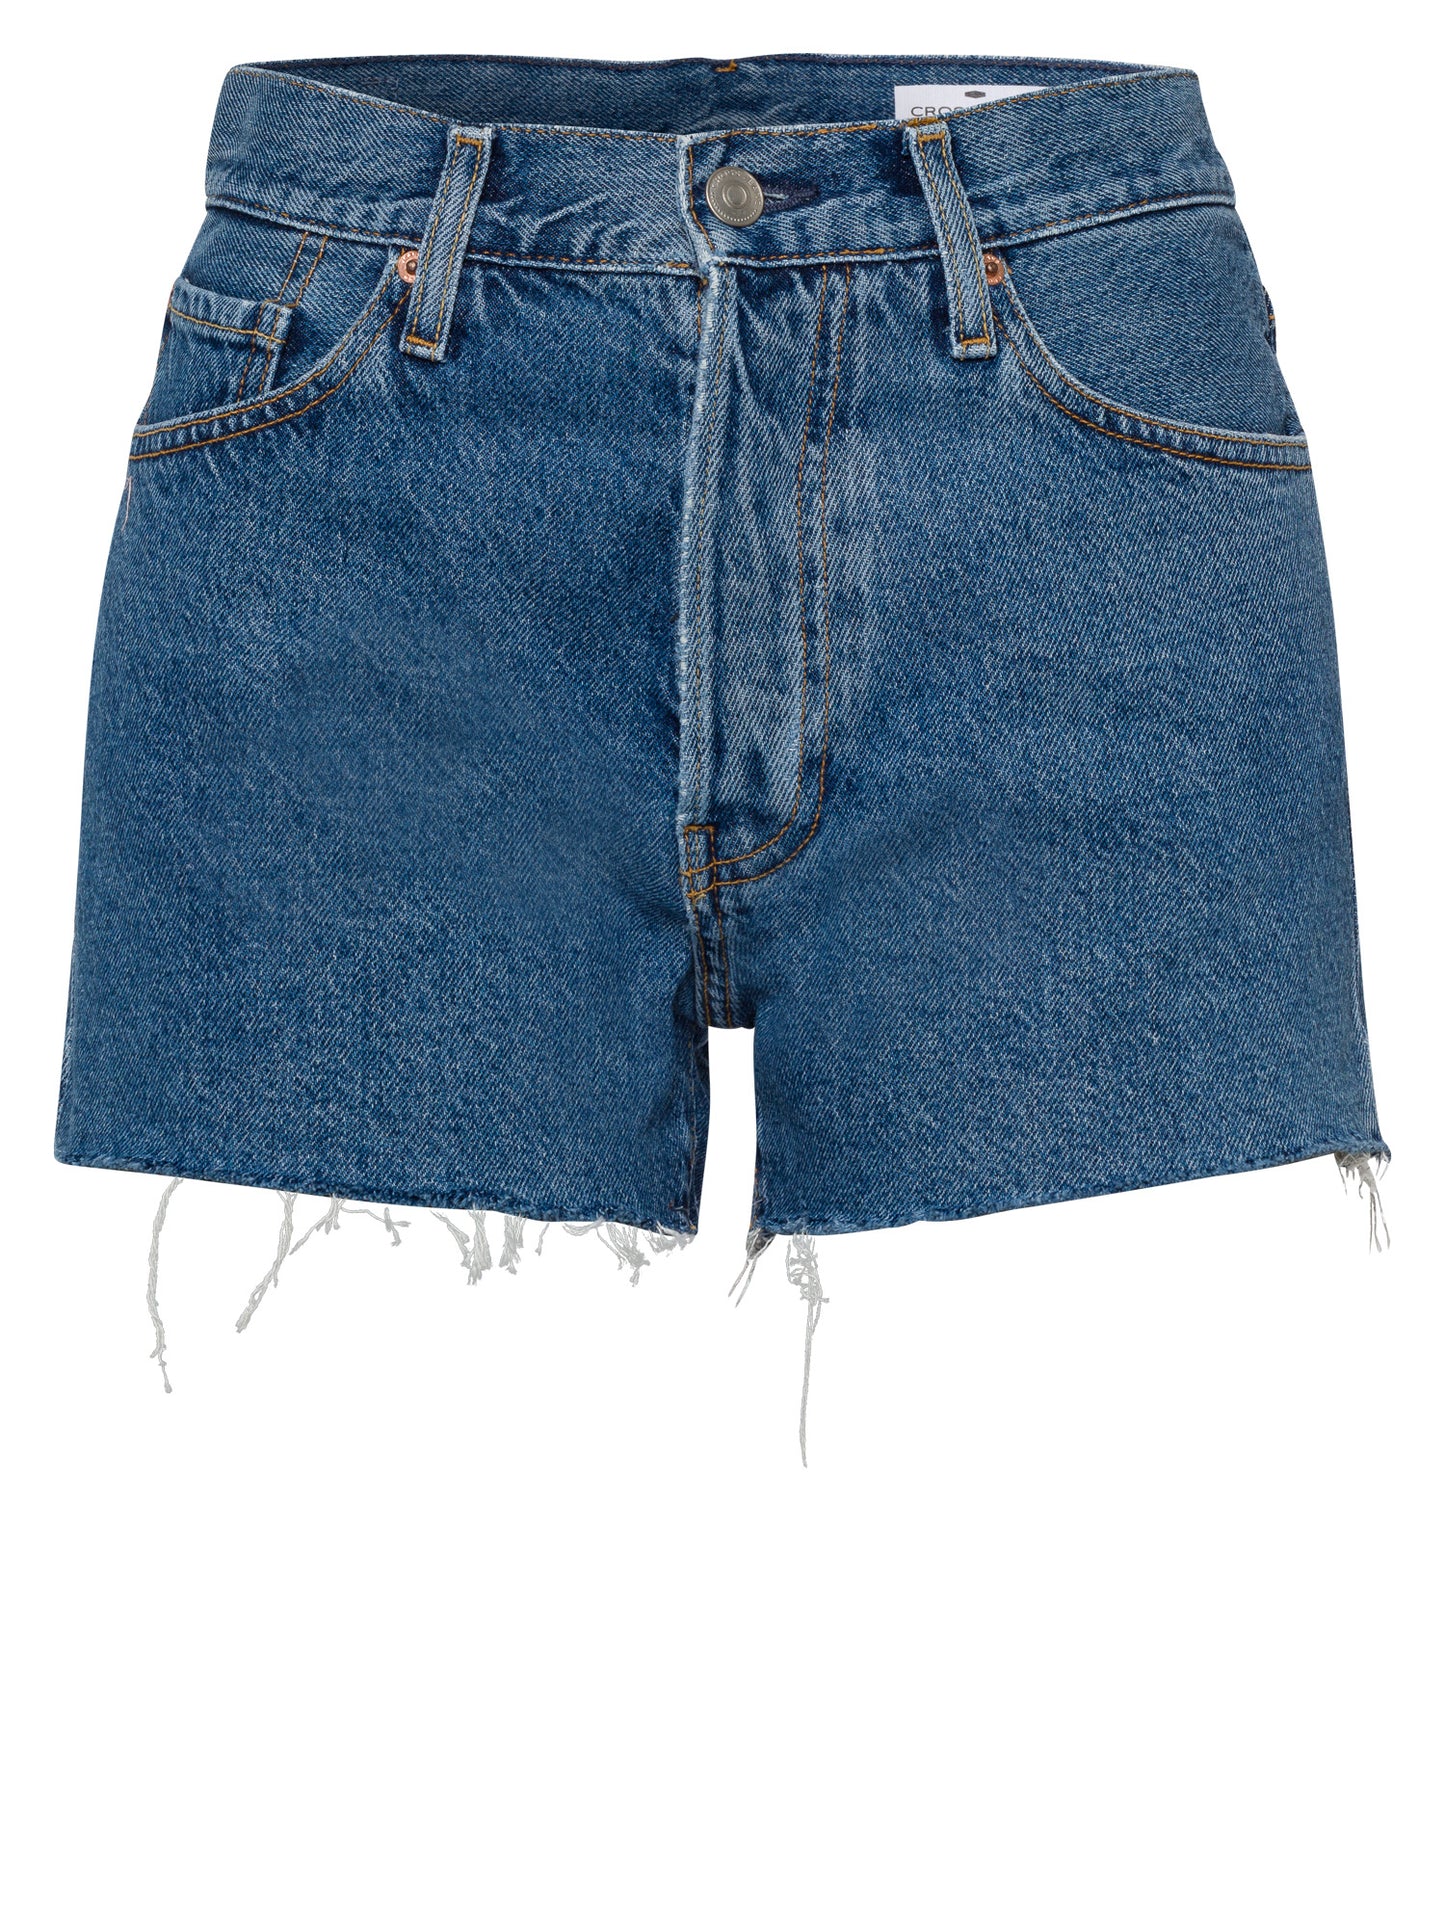 Women's denim shorts medium blue